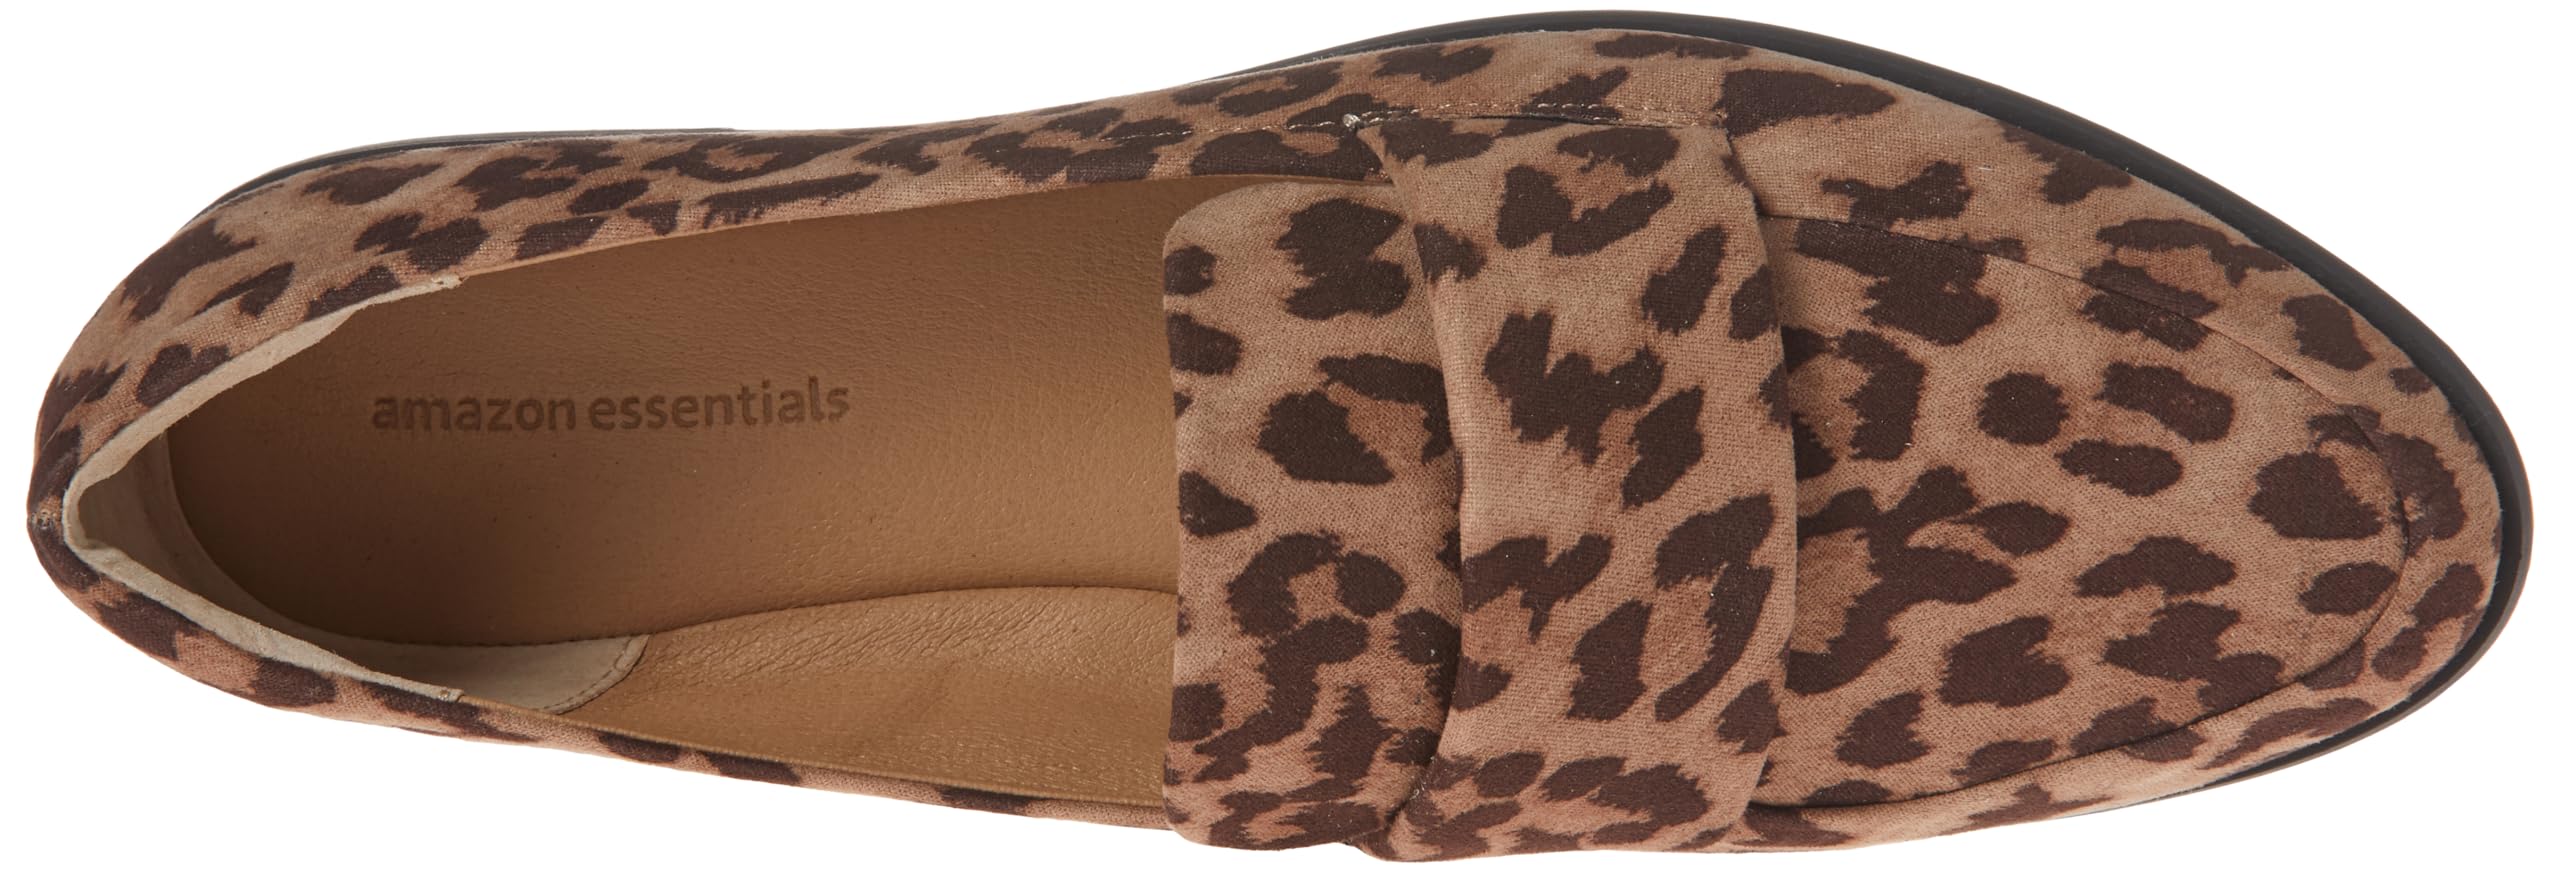 Amazon Essentials Women's Soft Moc Toe Loafer